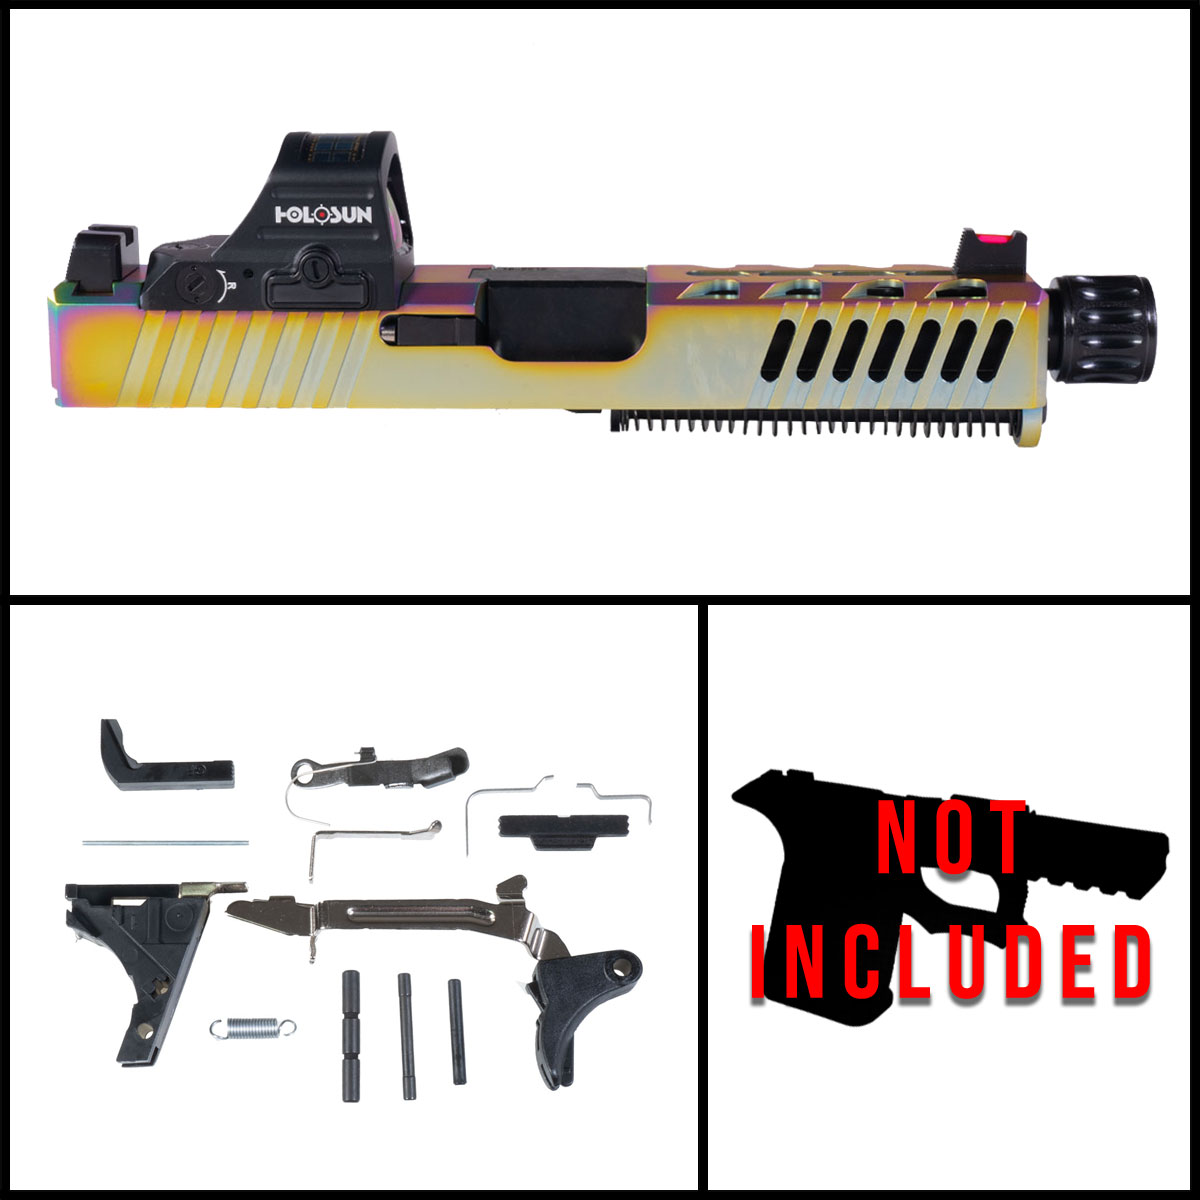 DTT 'Twilight Turbo w/ HS507C-X2' 9mm Full Pistol Build Kits (Everything Minus Frame) - Glock 19 Gen 1-2 Compatible